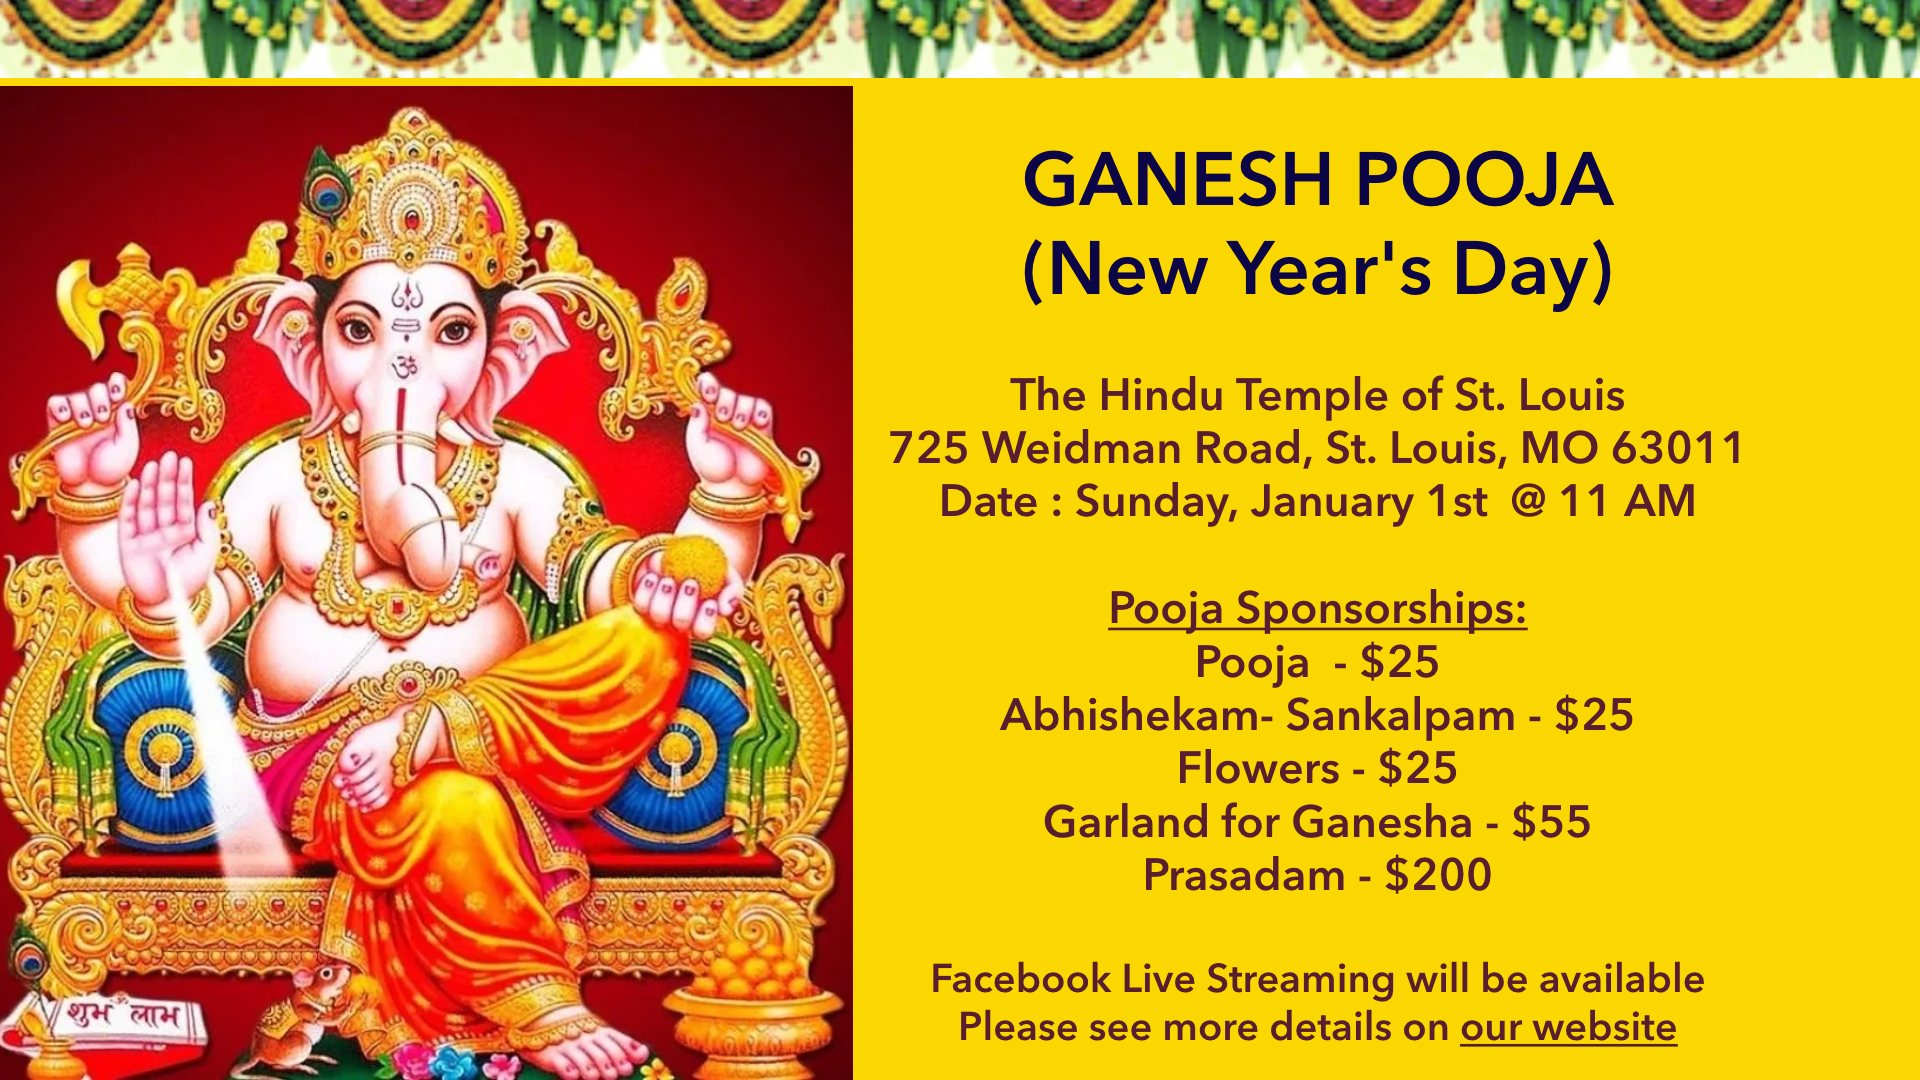 Ganesh Pooja – New Year’s Day